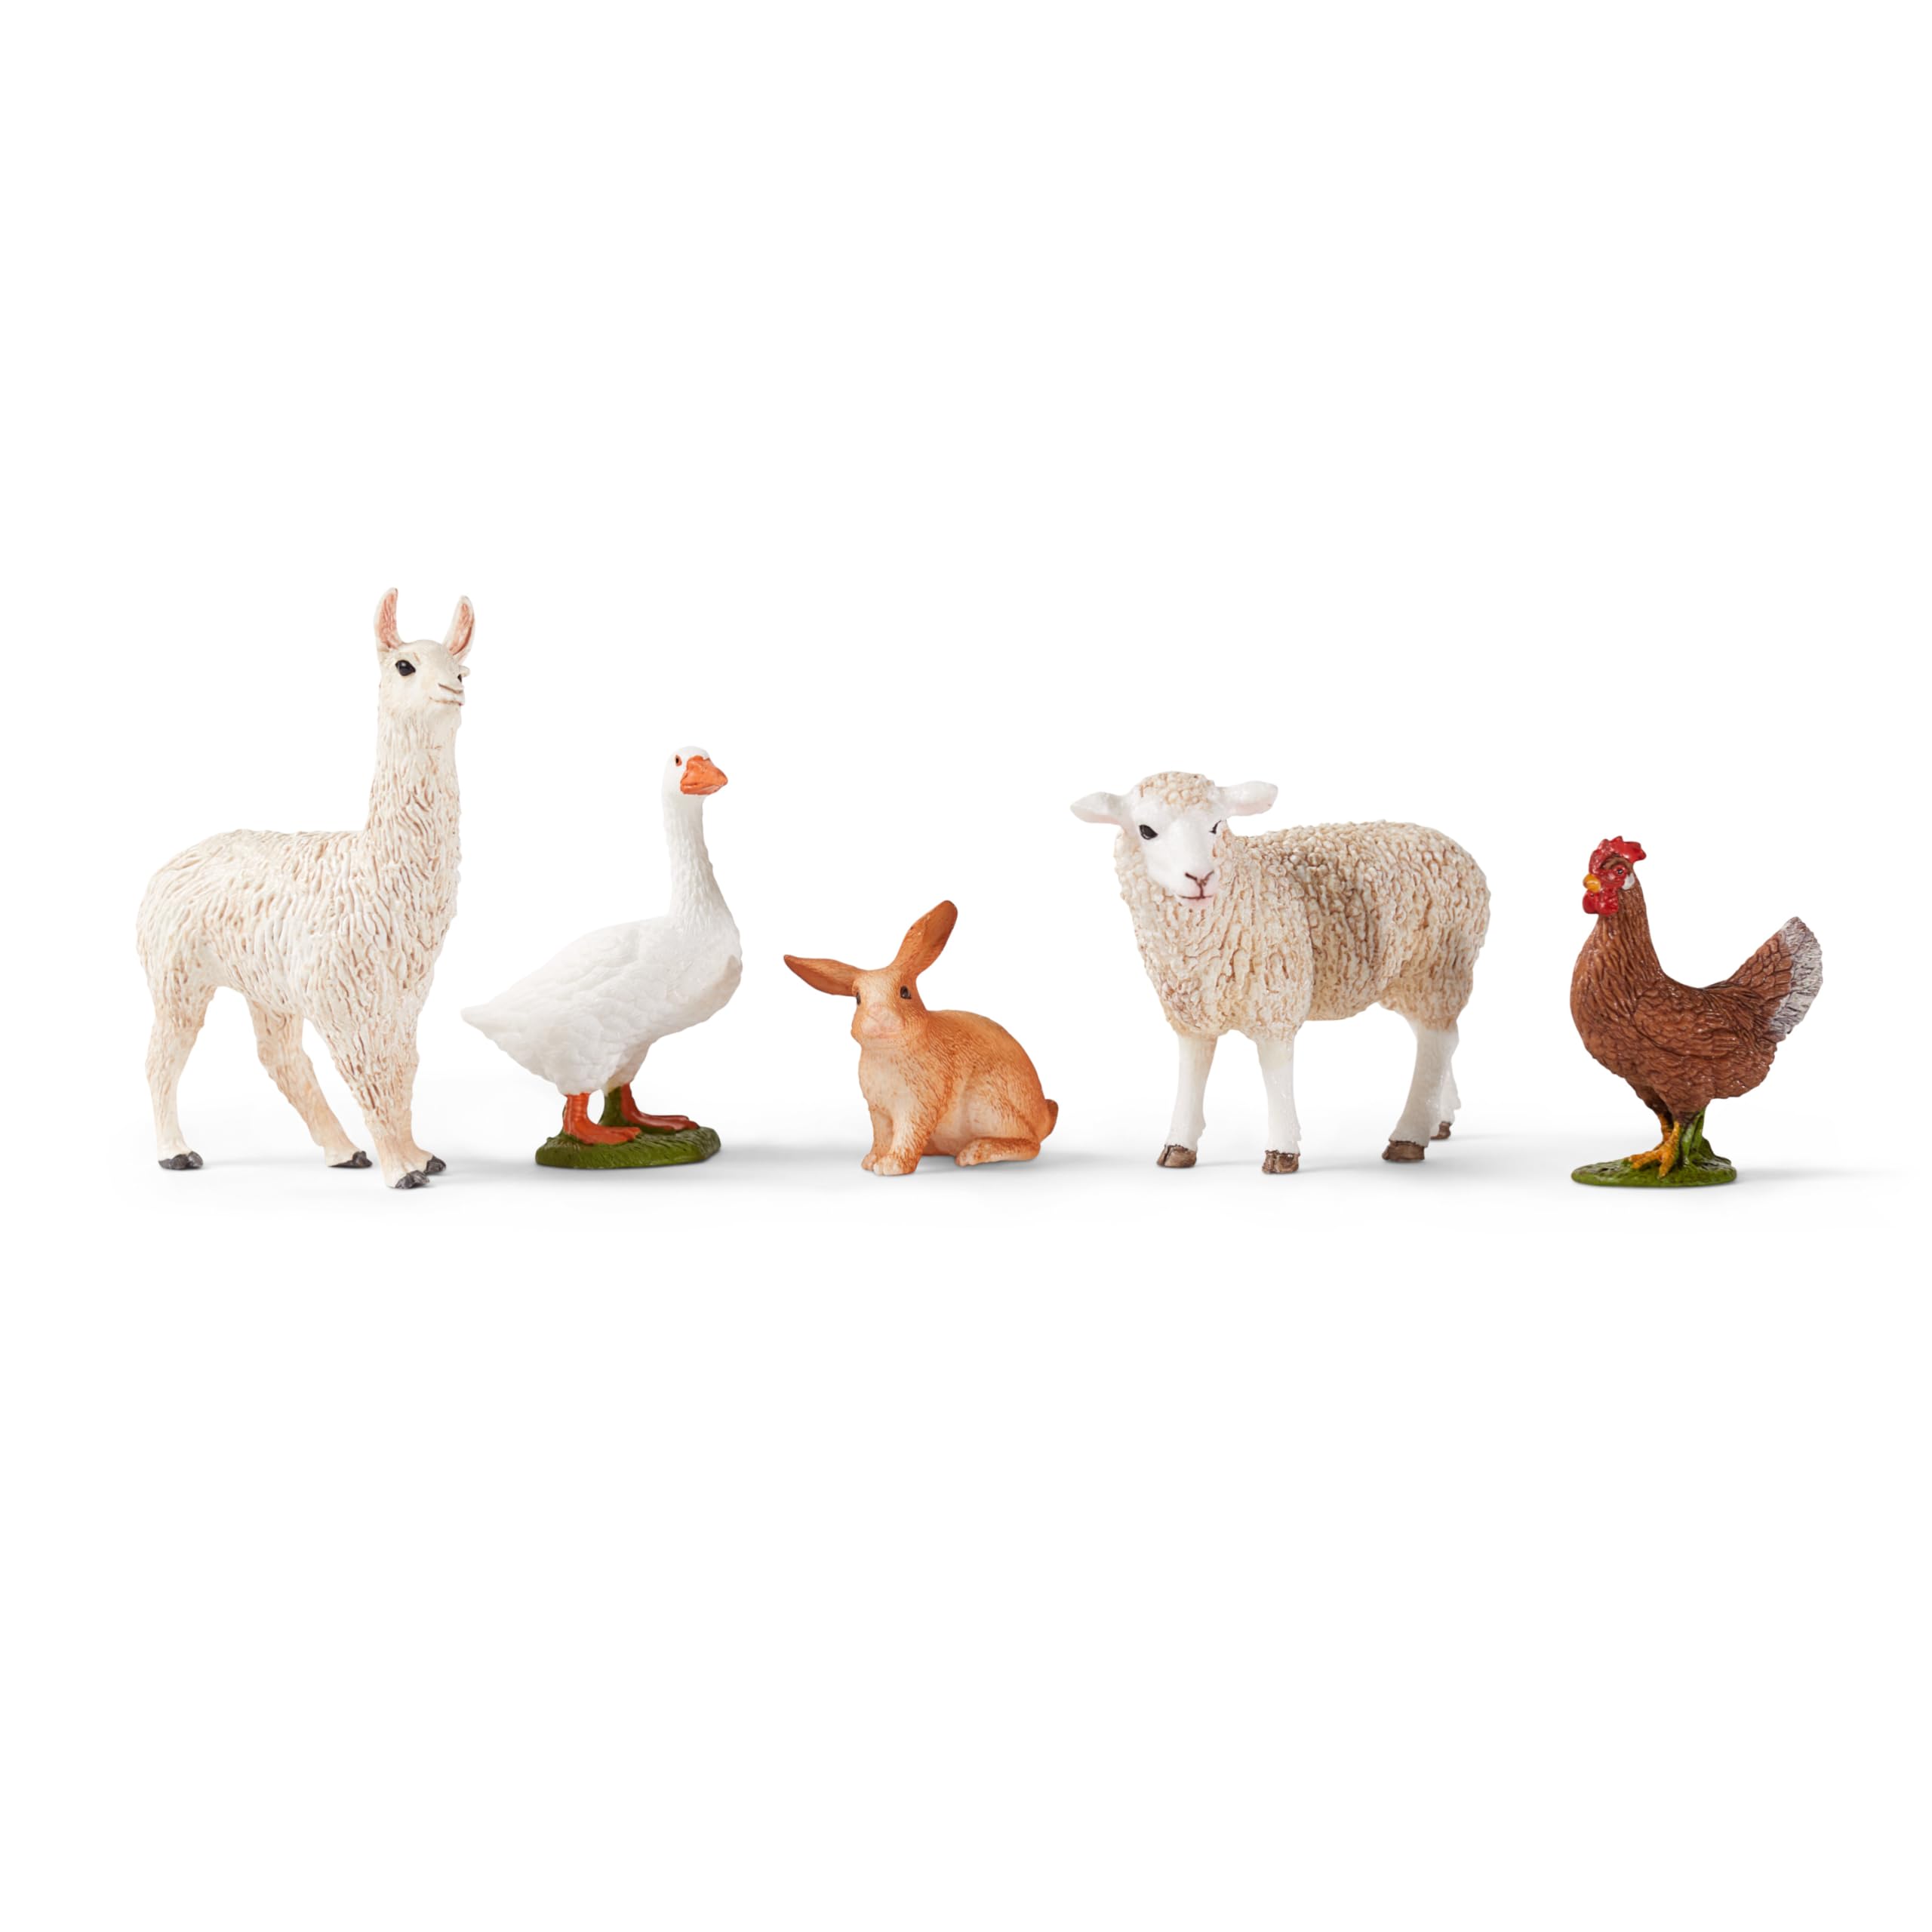 Schleich Farm World 5-Piece Farm Animal Toy Set Including Cute Llama, Rabbit, Sheep, Hen and Goose Animal Toys for Easter Baskets